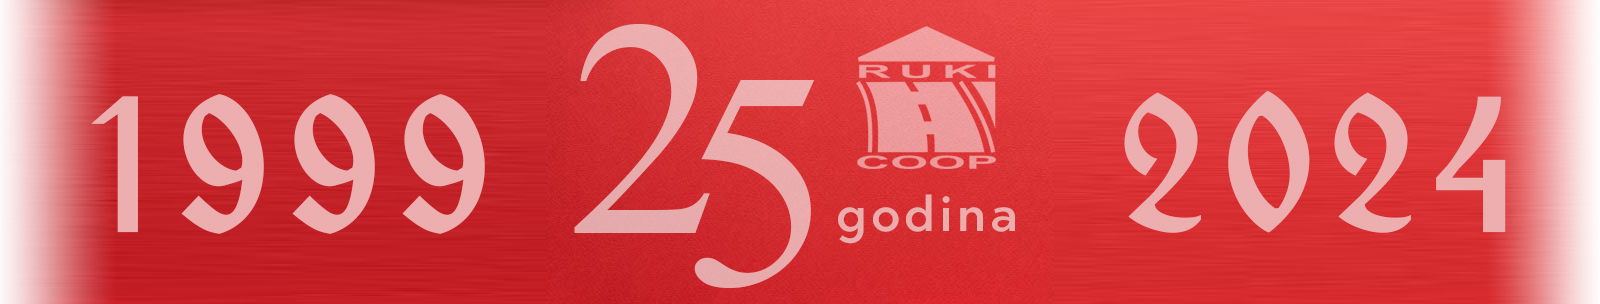 RukiCoop-banner-25-godina-firme-belina